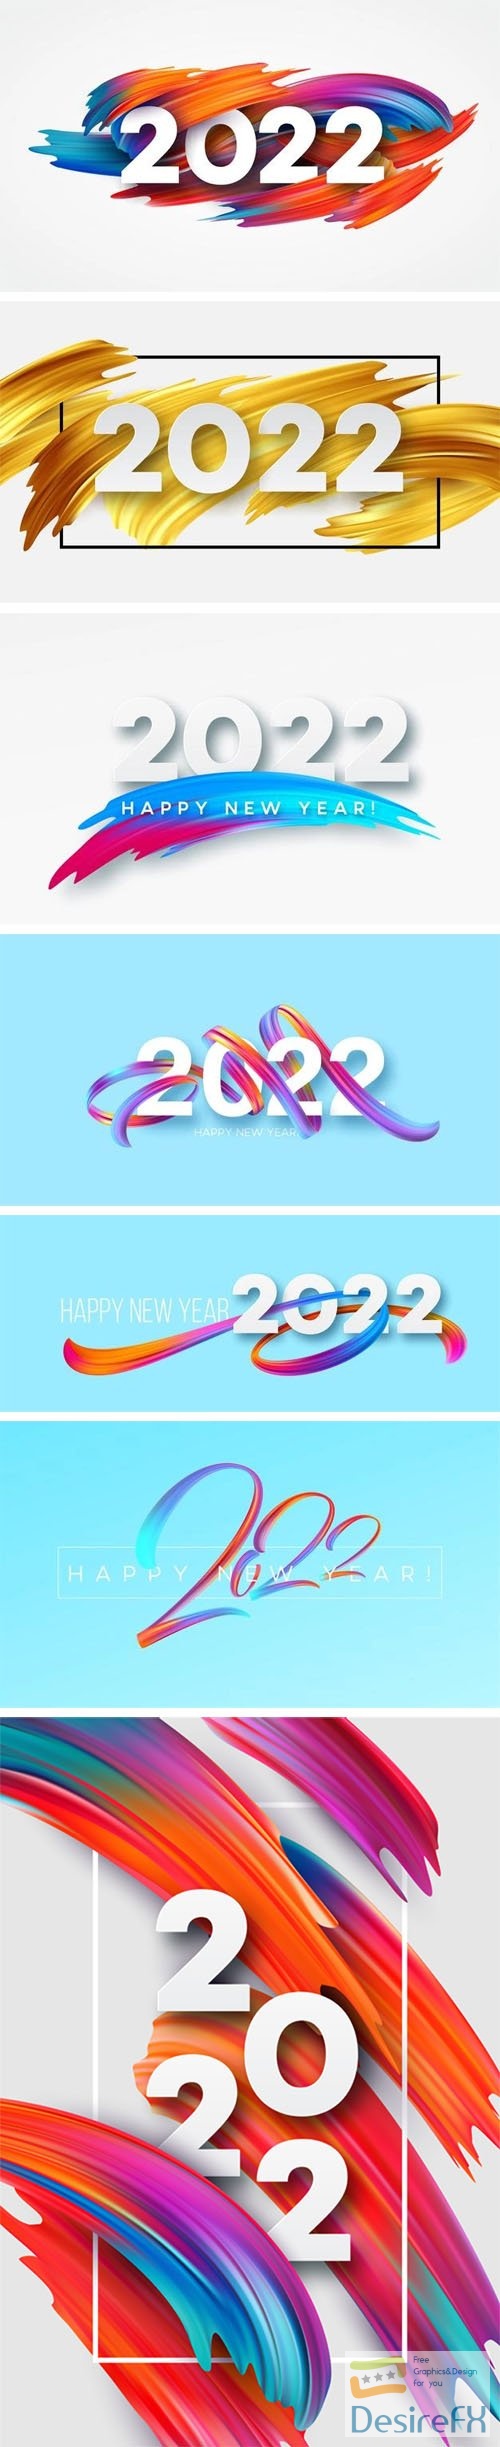 Happy New Year 2022 Calendar Headers + Backgrounds Vector Templates